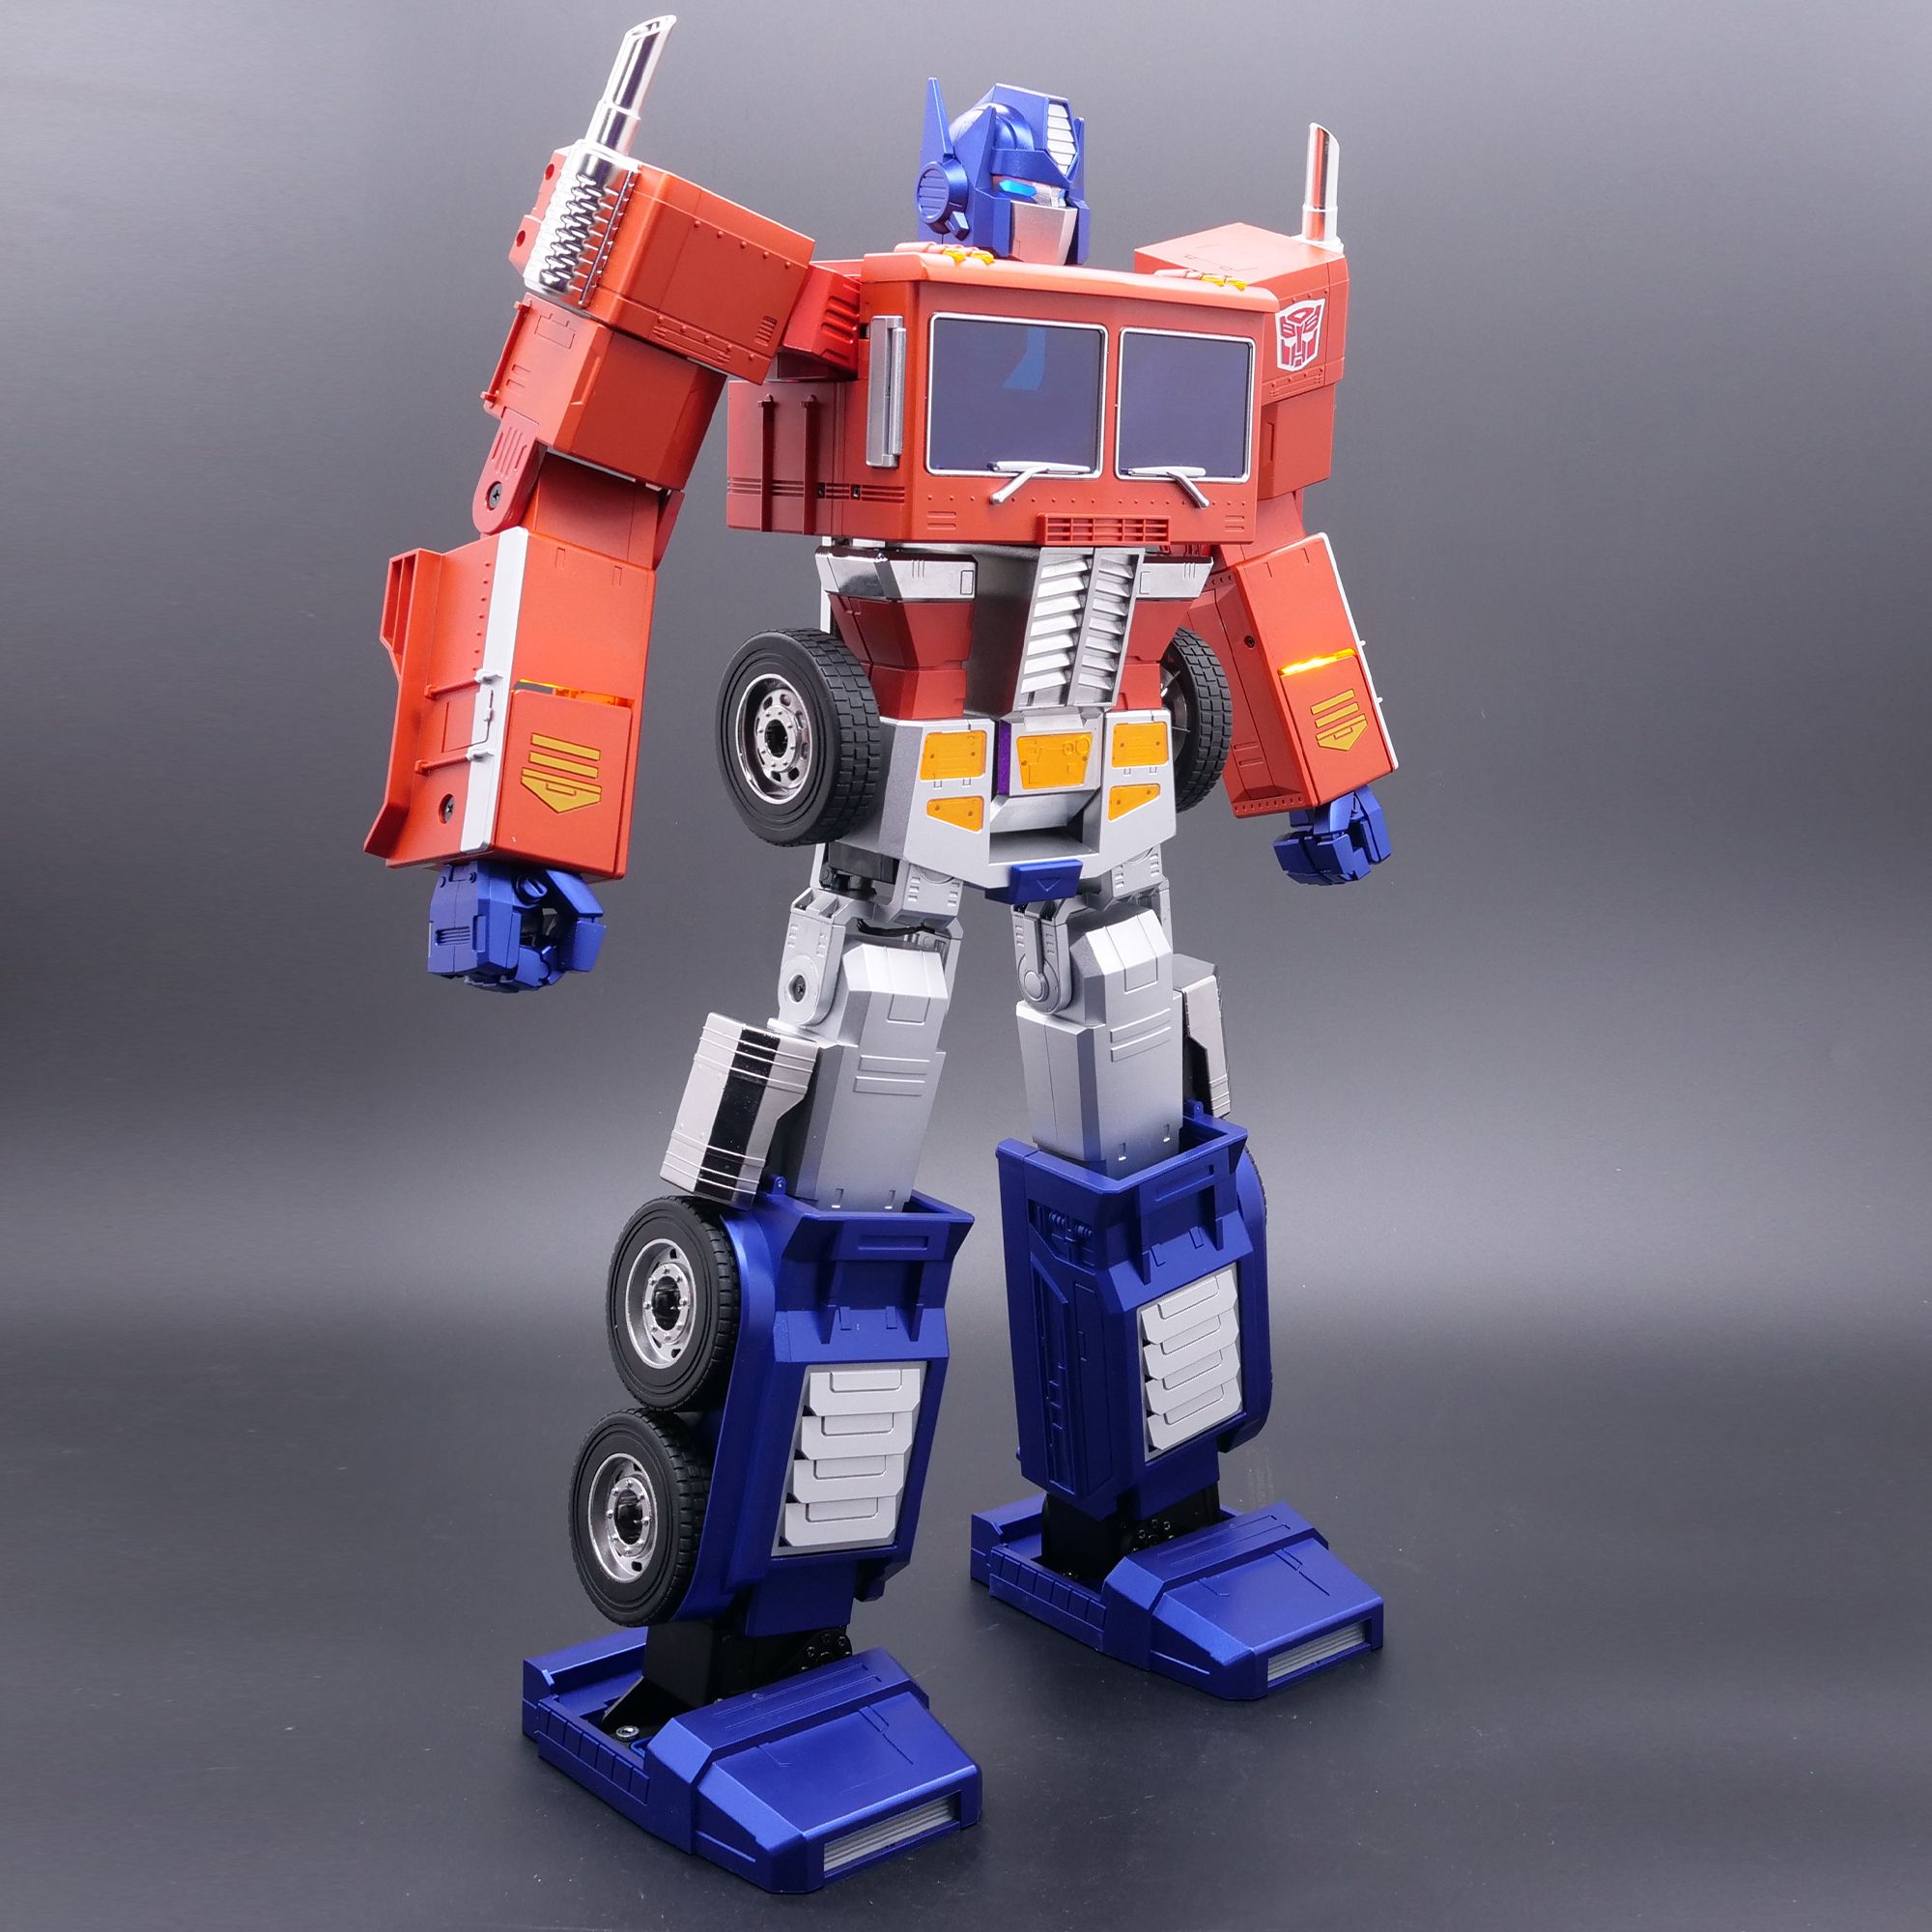 Transformers new Optimus Prime Robot.